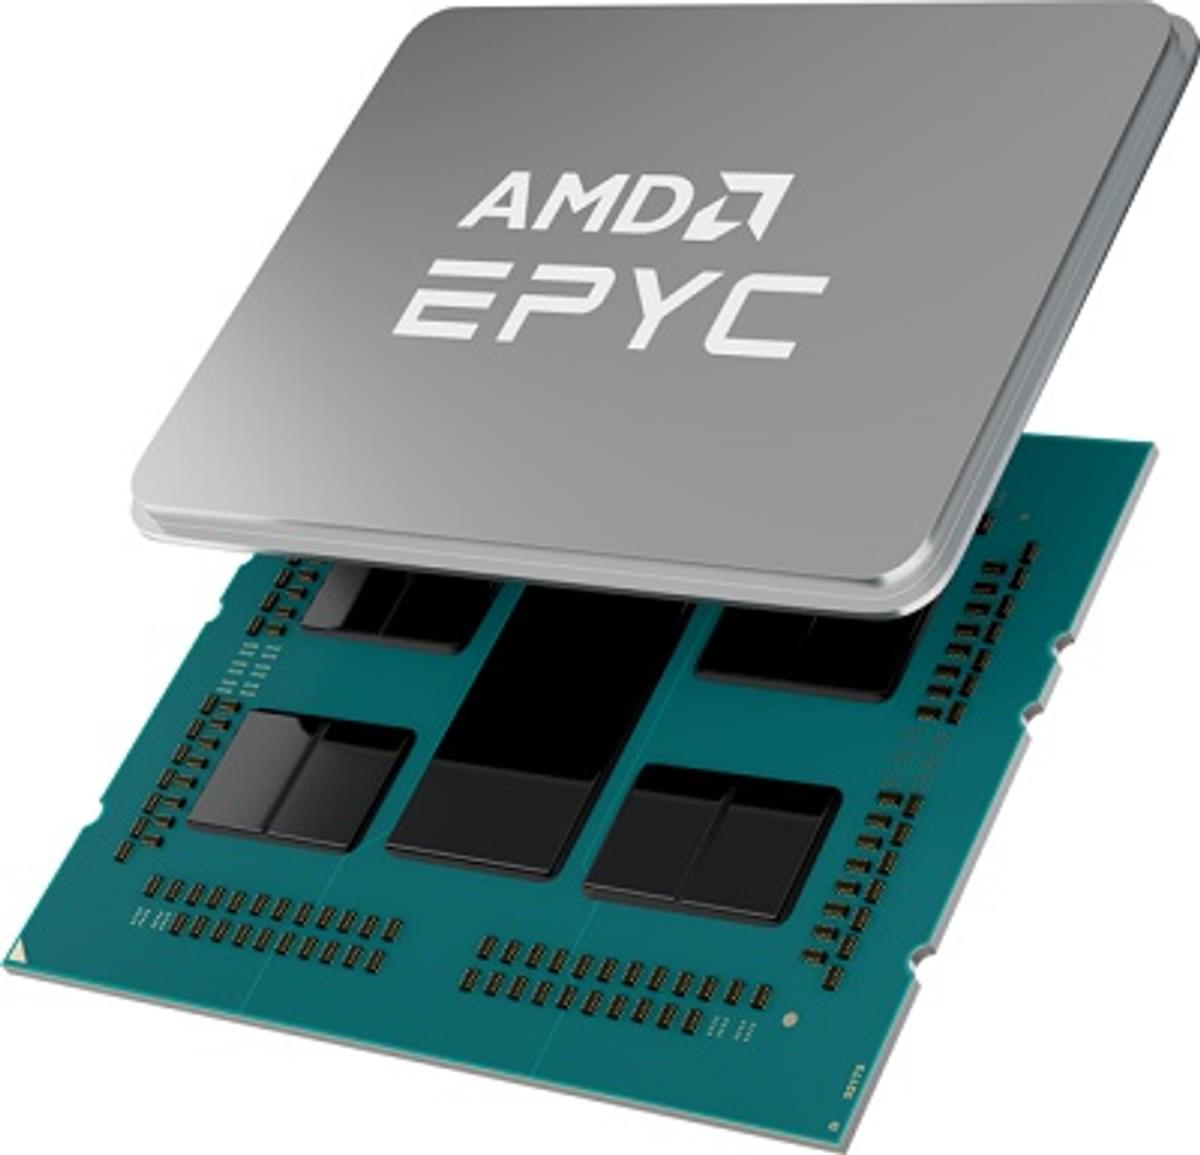 AMD lanceert nieuwe EPYC server processors image